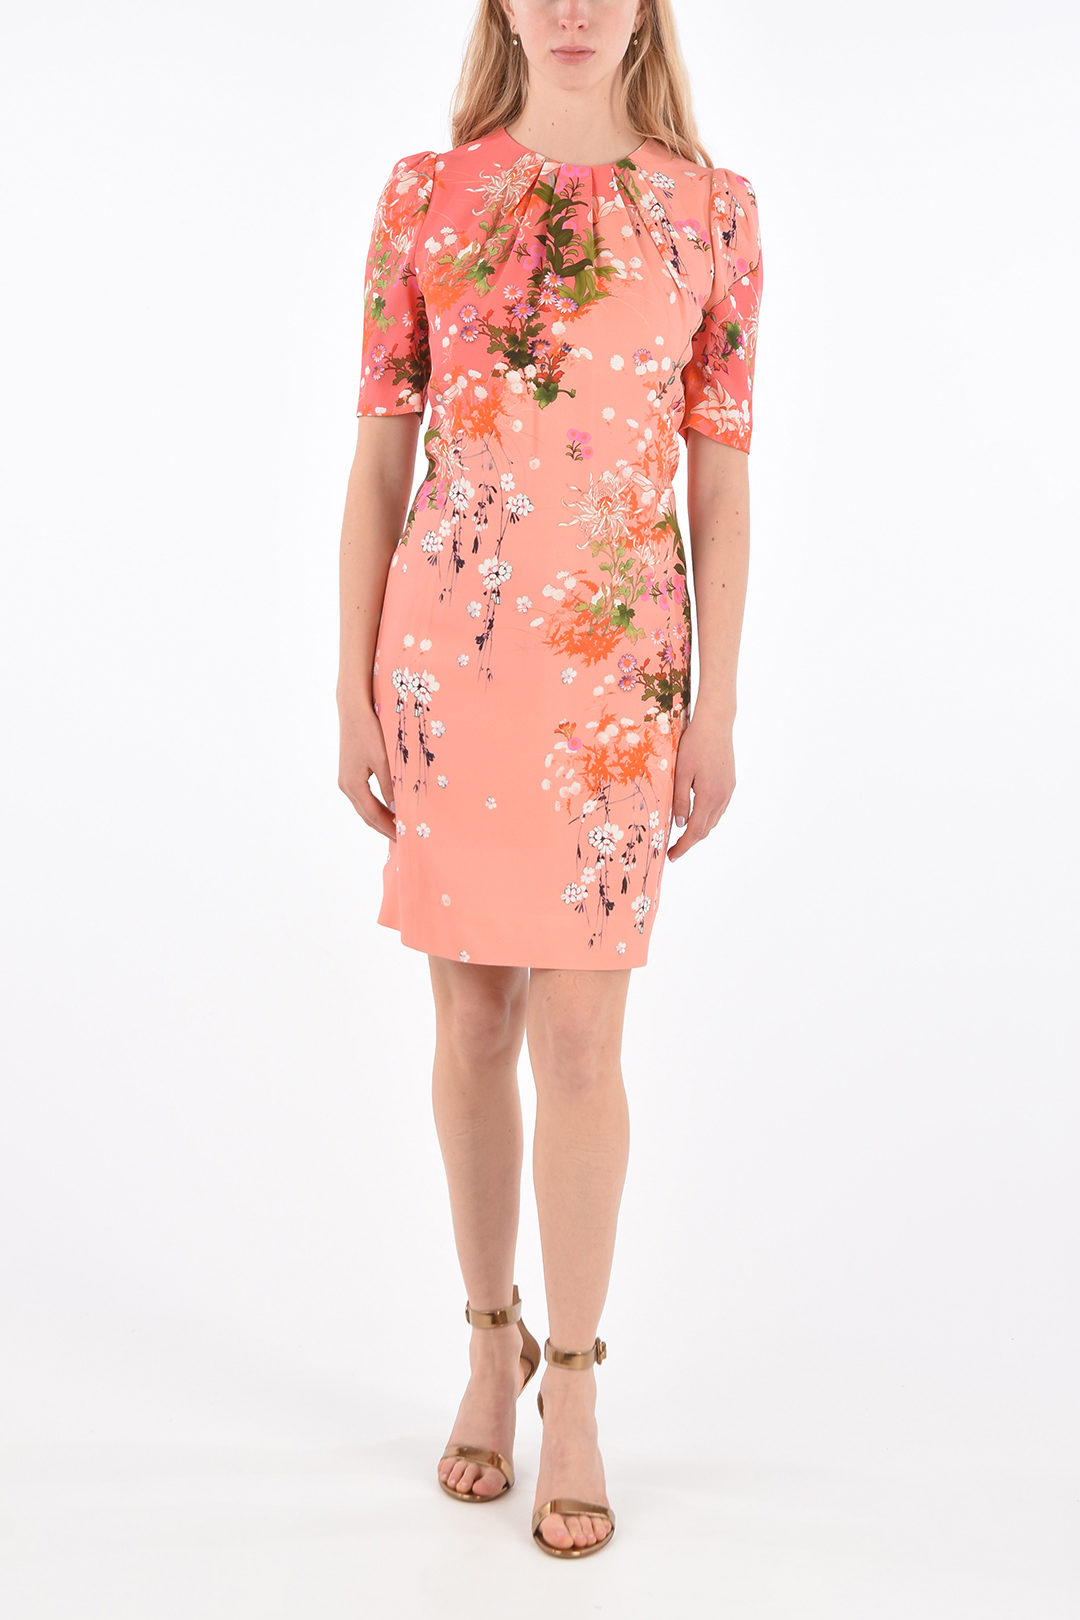 Givenchy Floral Short Sleeve Mini Dress ...